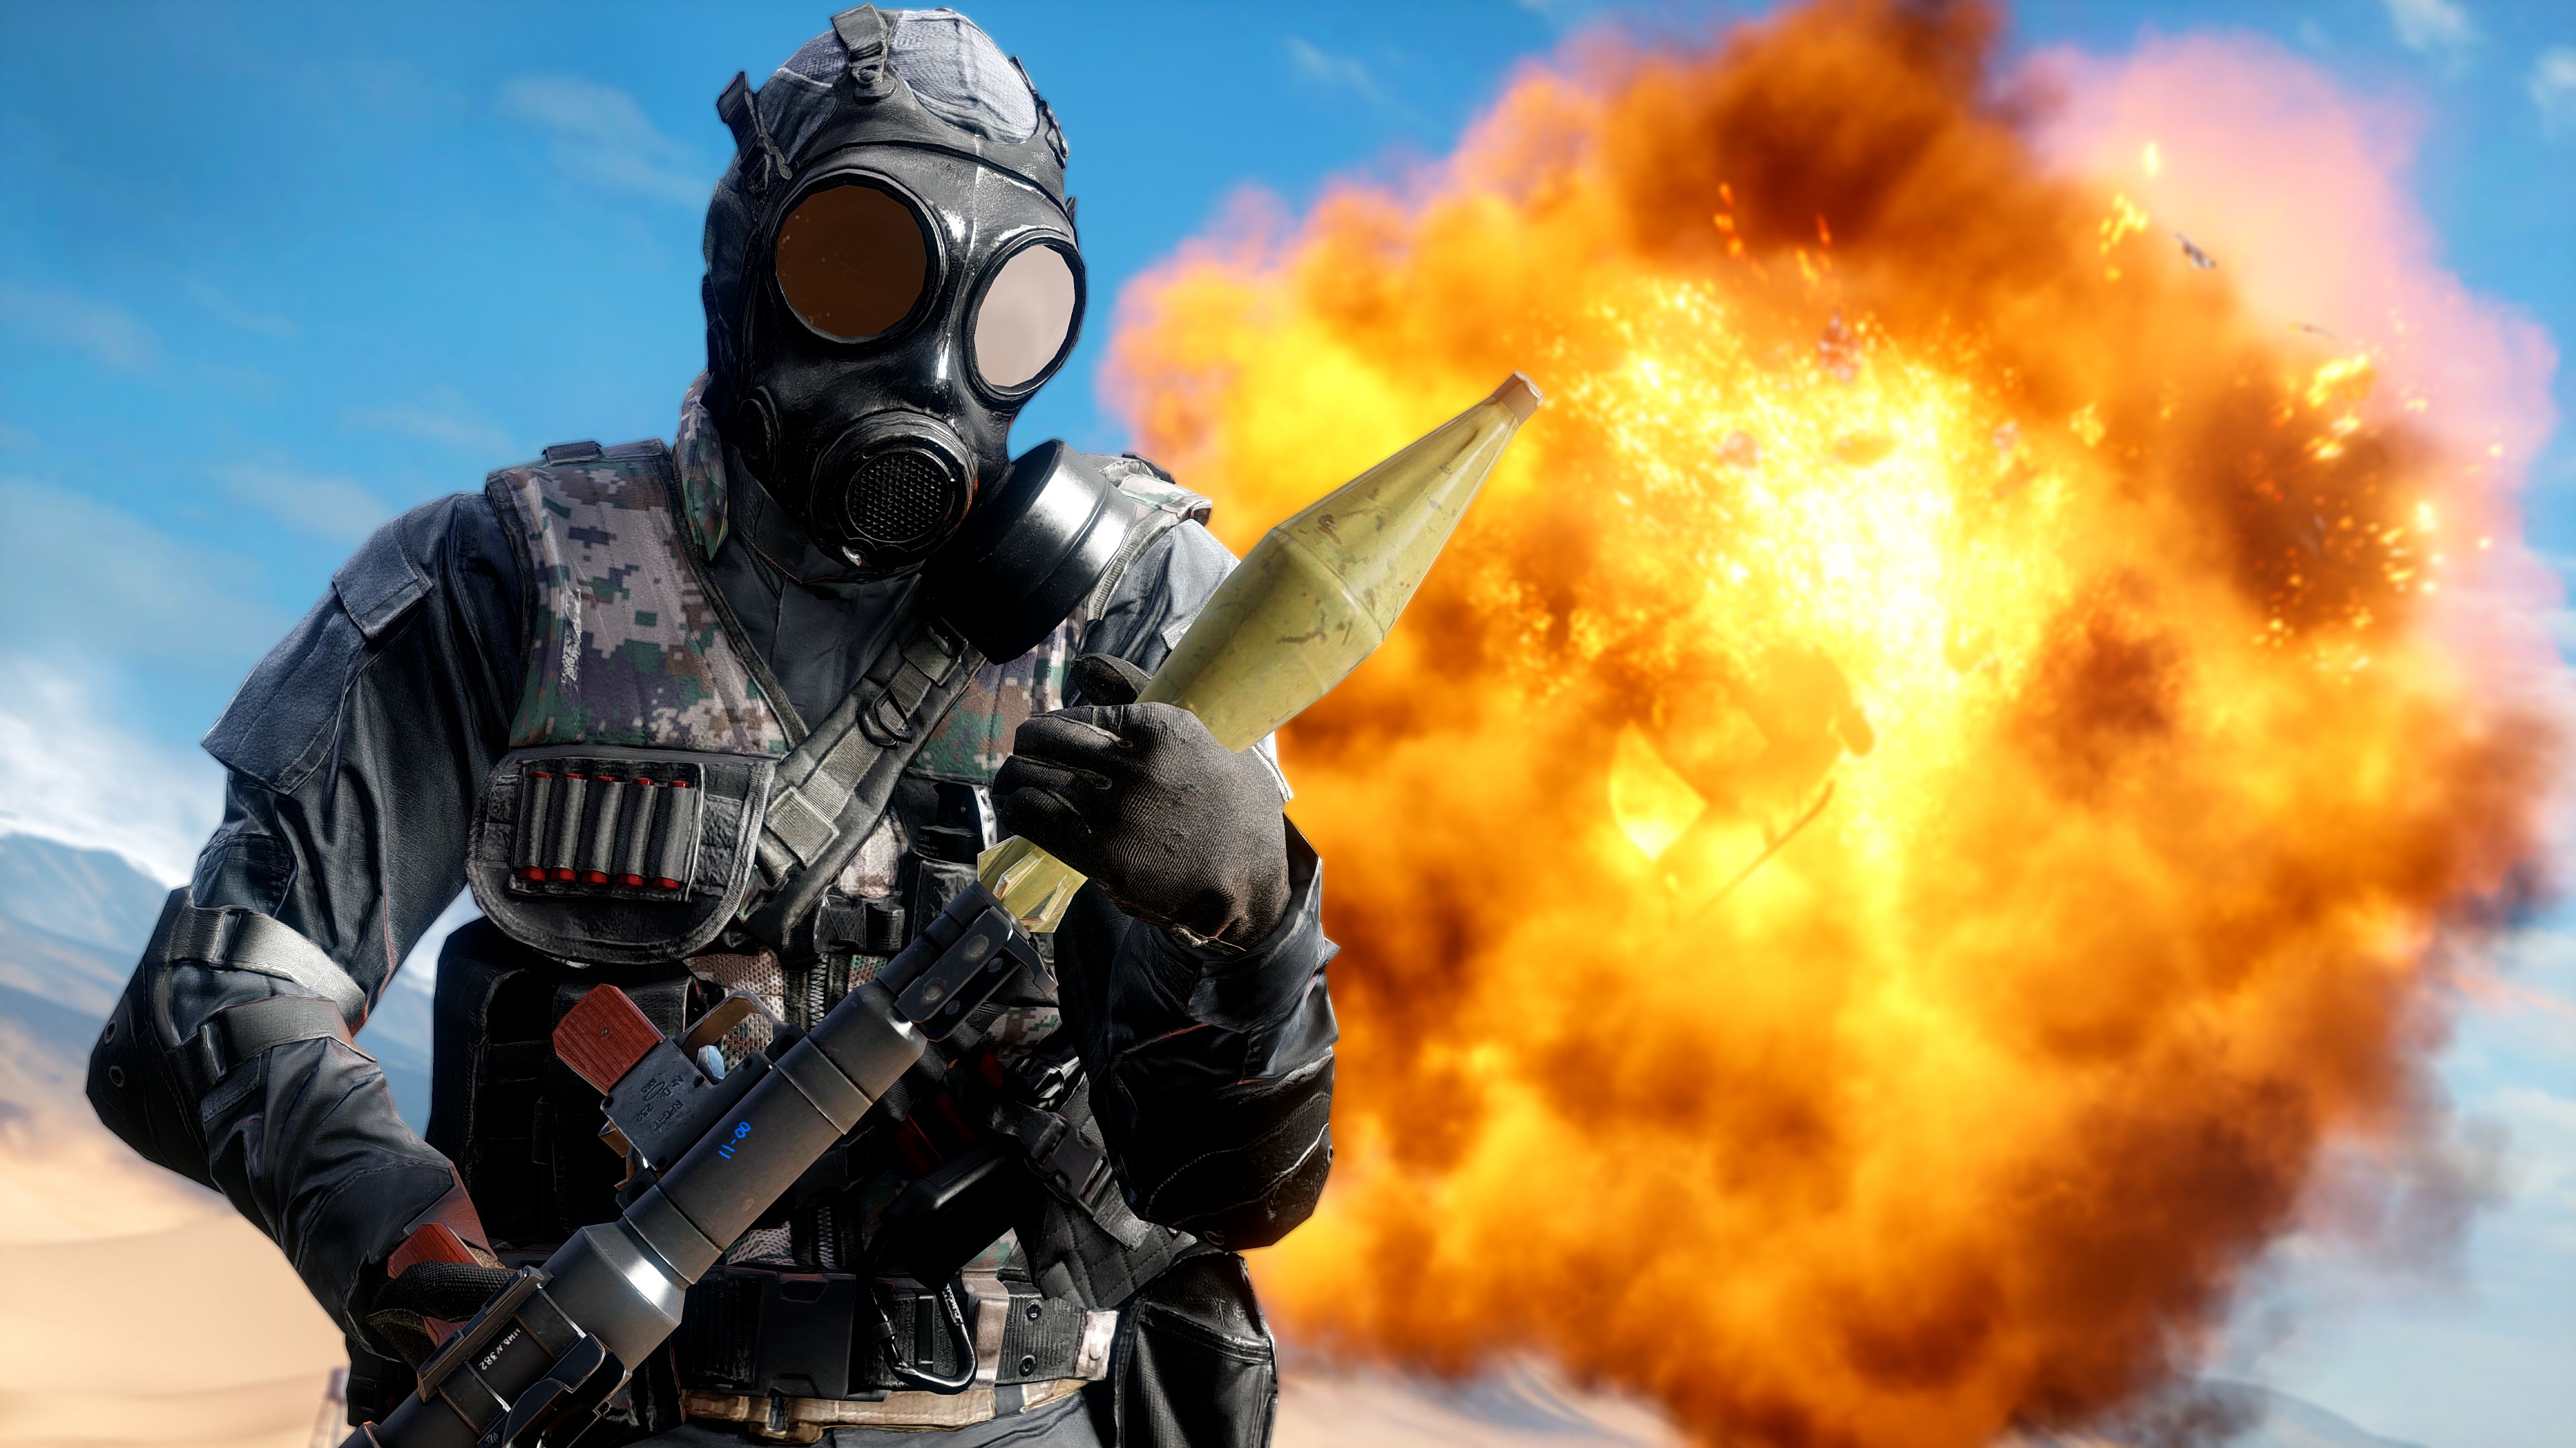 video game, battlefield 4, explosion, gas mask, rocket launcher, soldier, battlefield